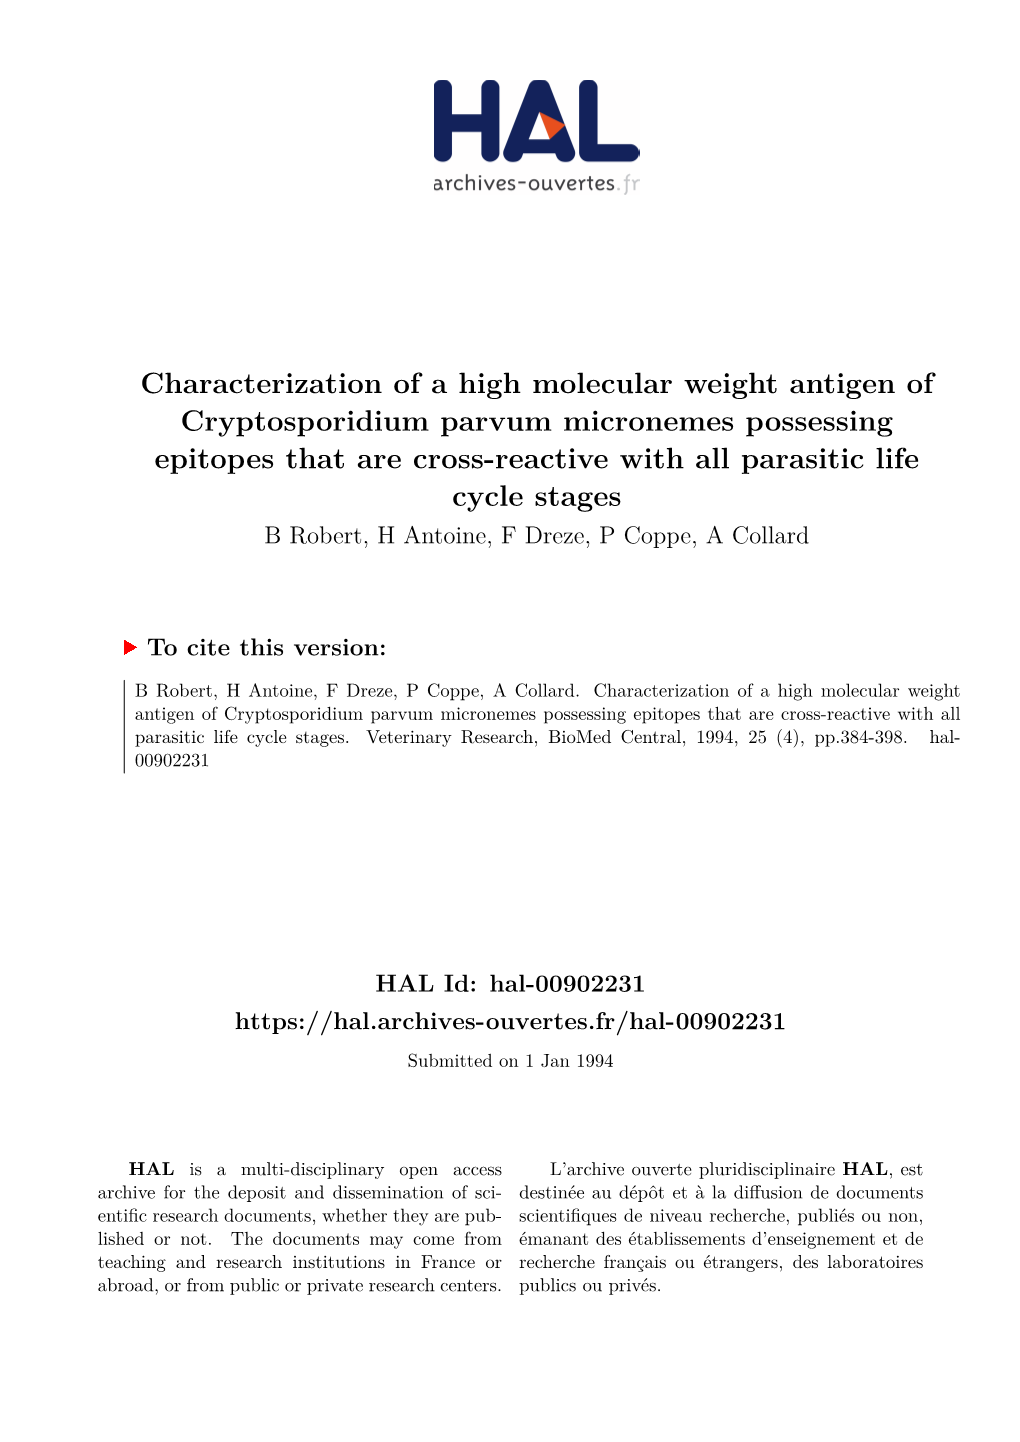 Characterization of a High Molecular Weight Antigen of Cryptosporidium